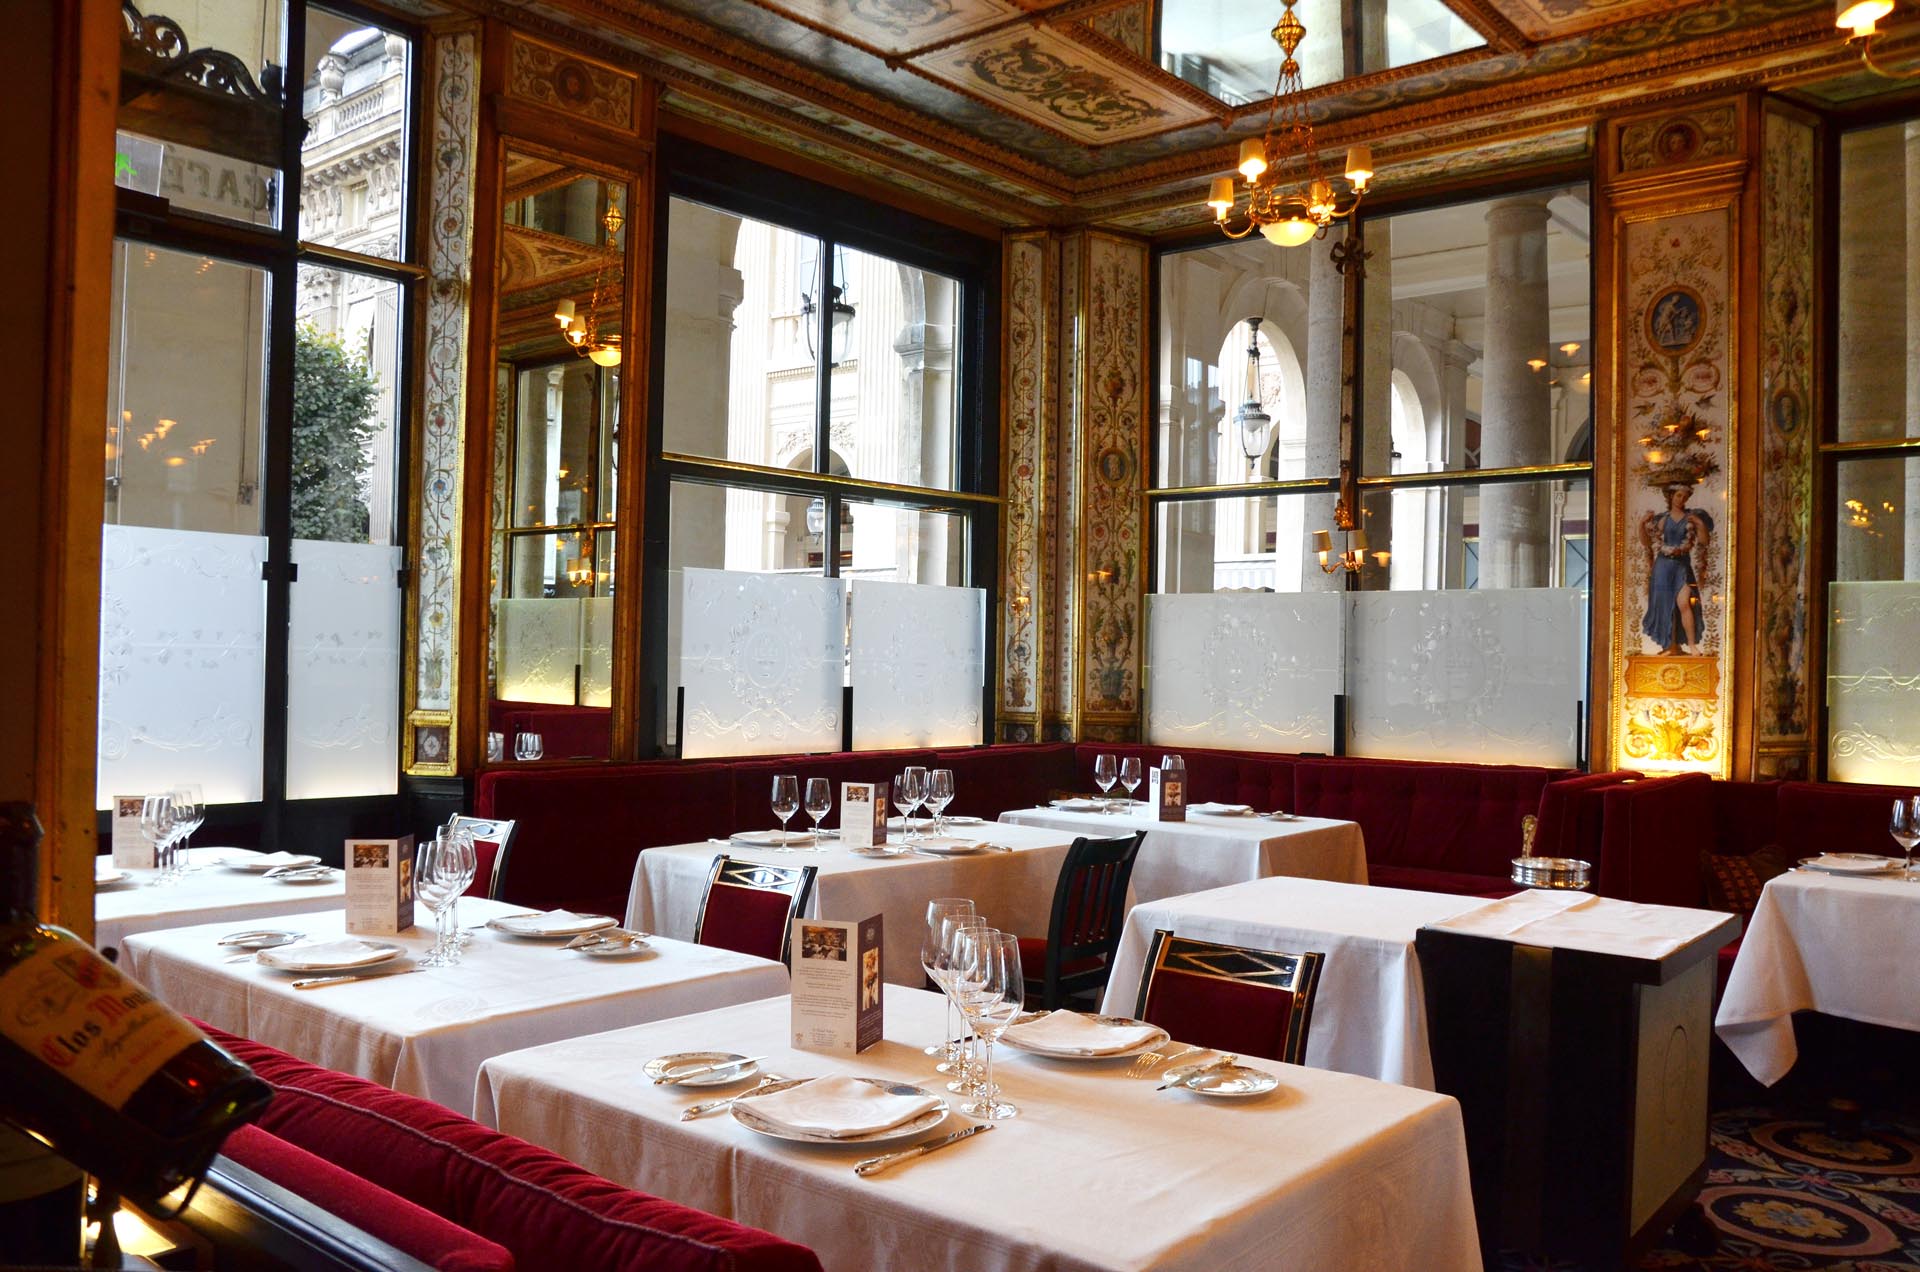 Le Grand Vefour: oldest fine dining restaurant in Paris